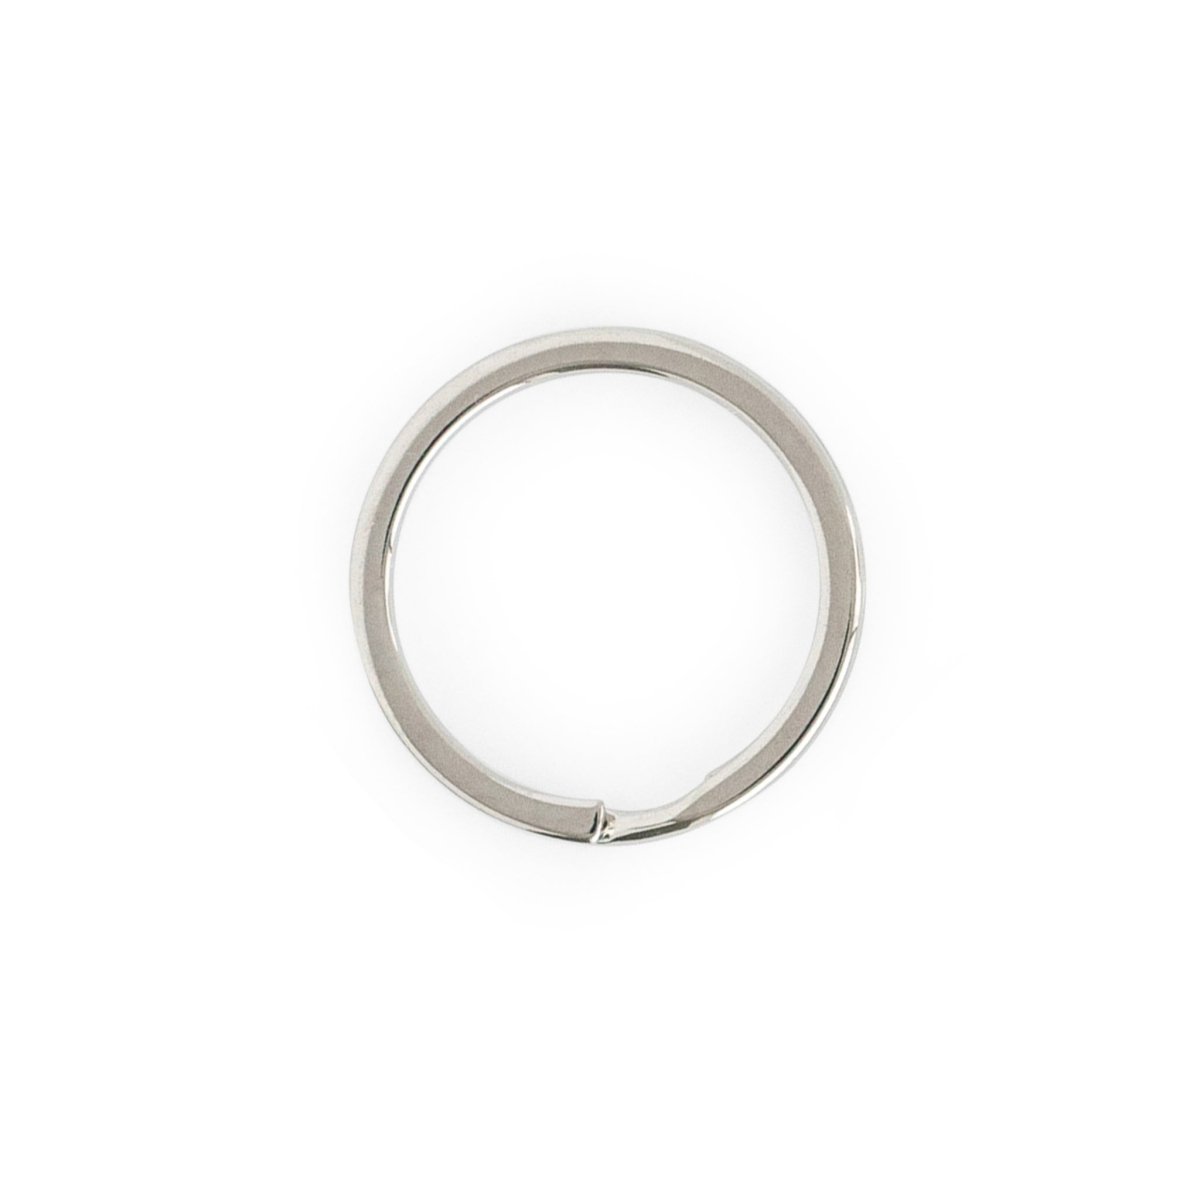 Key Rings Premium Keyrings Large Keyring (30mm) from Cara & Co Craft Supply